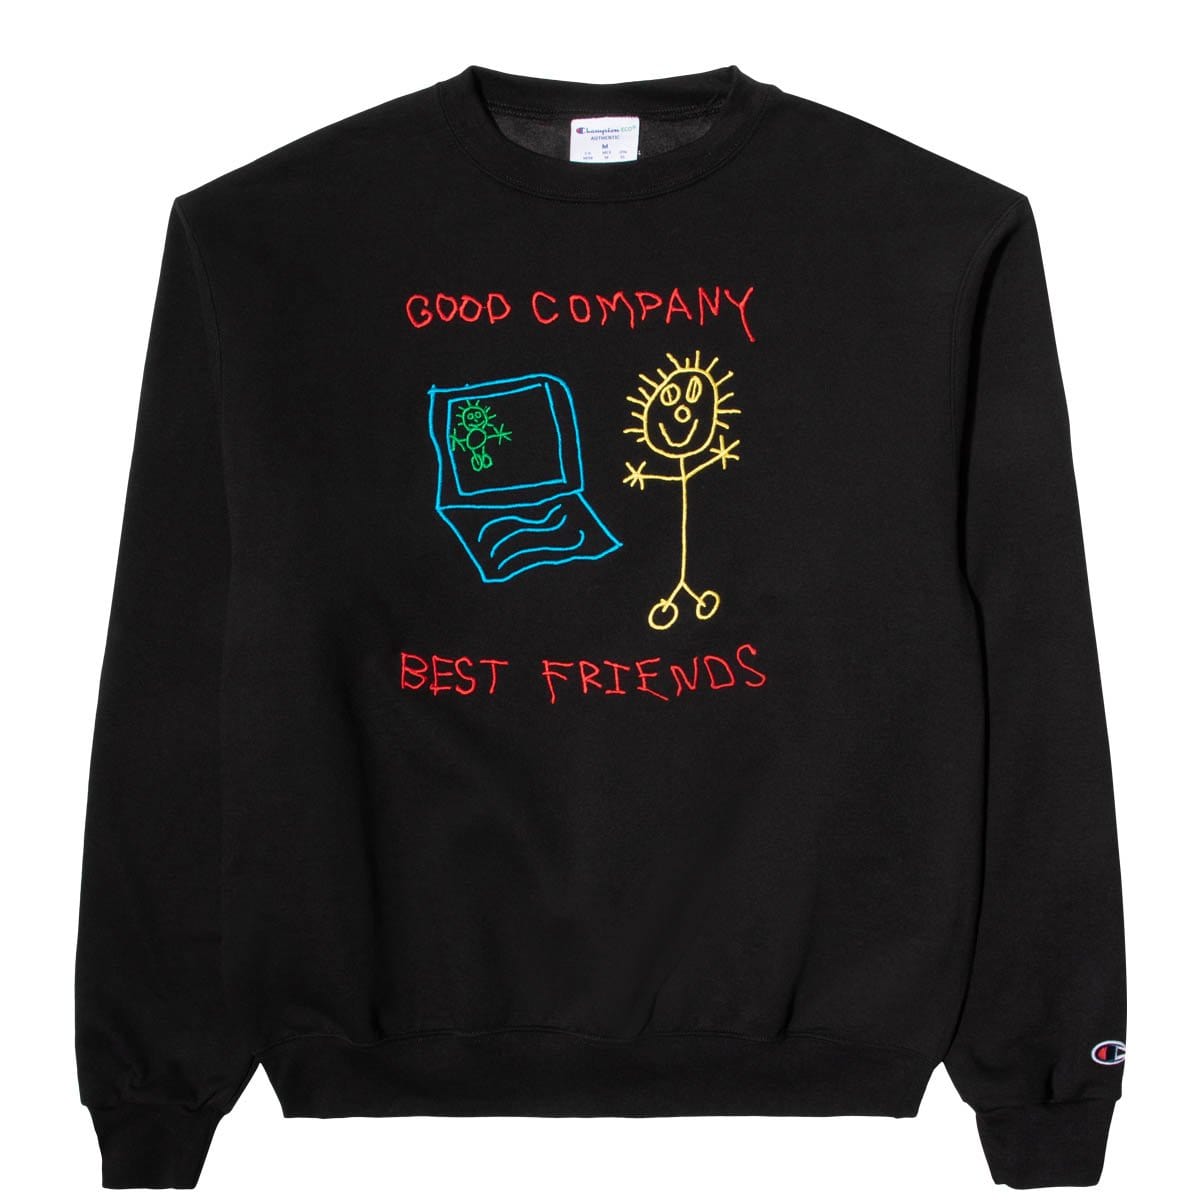 The Good Company Hoodies & Sweatshirts BEST FRIENDS CREWNECK